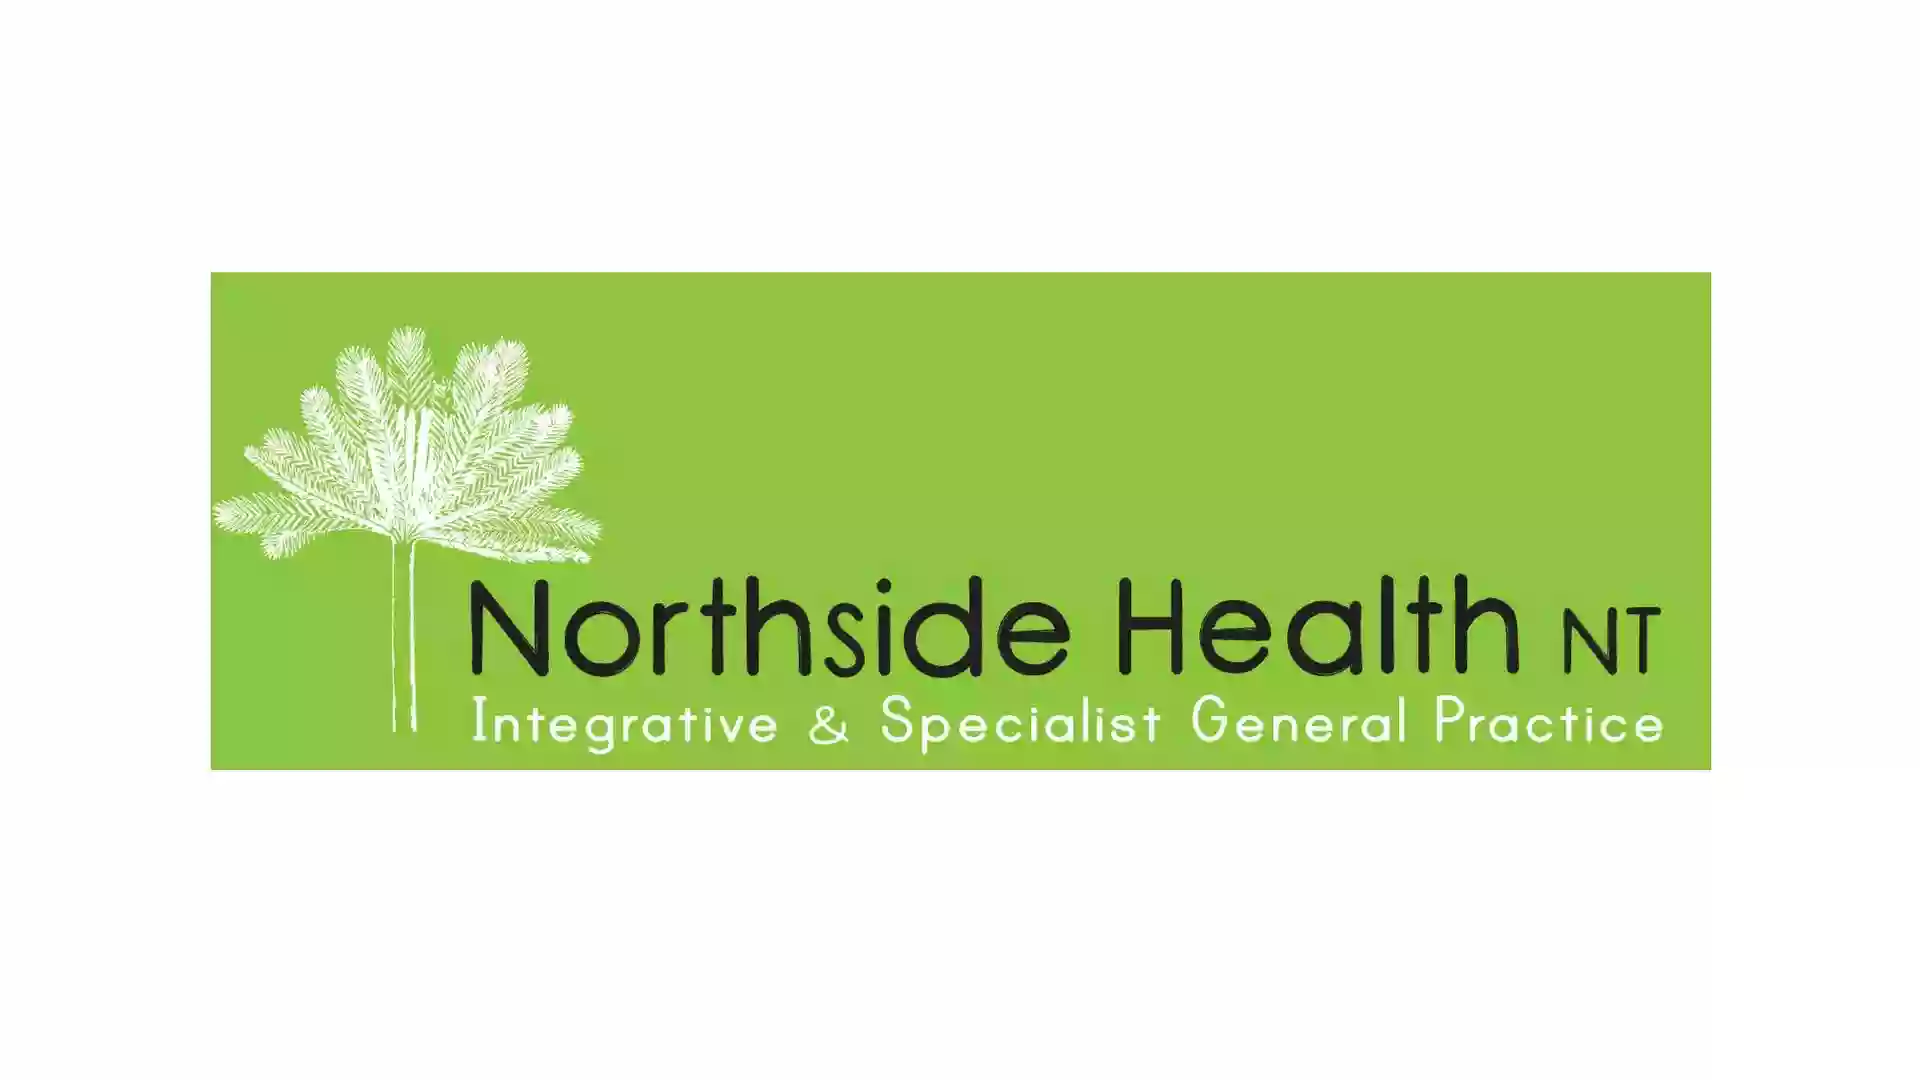 Northside Health NT